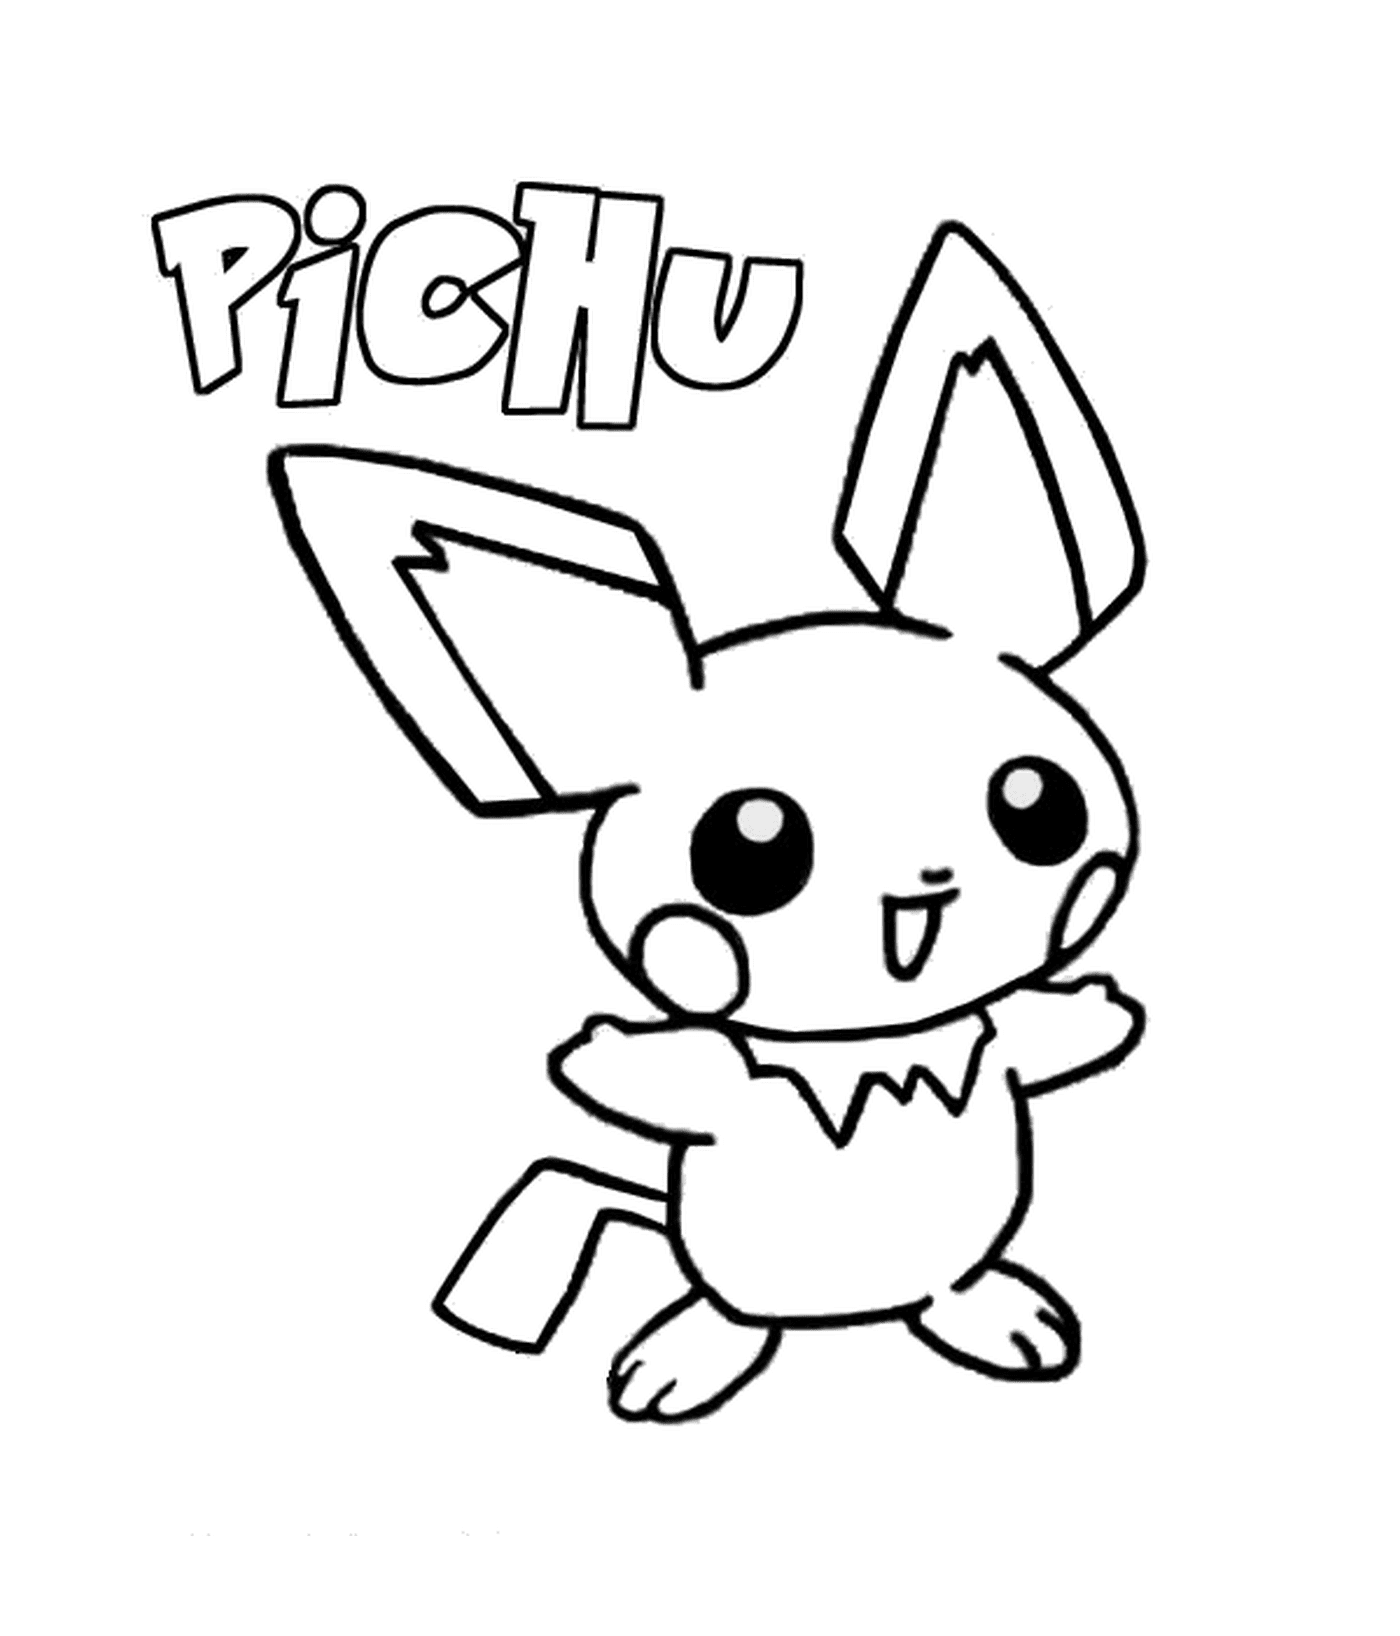  Pichu : Versione del bambino di Pikachu 